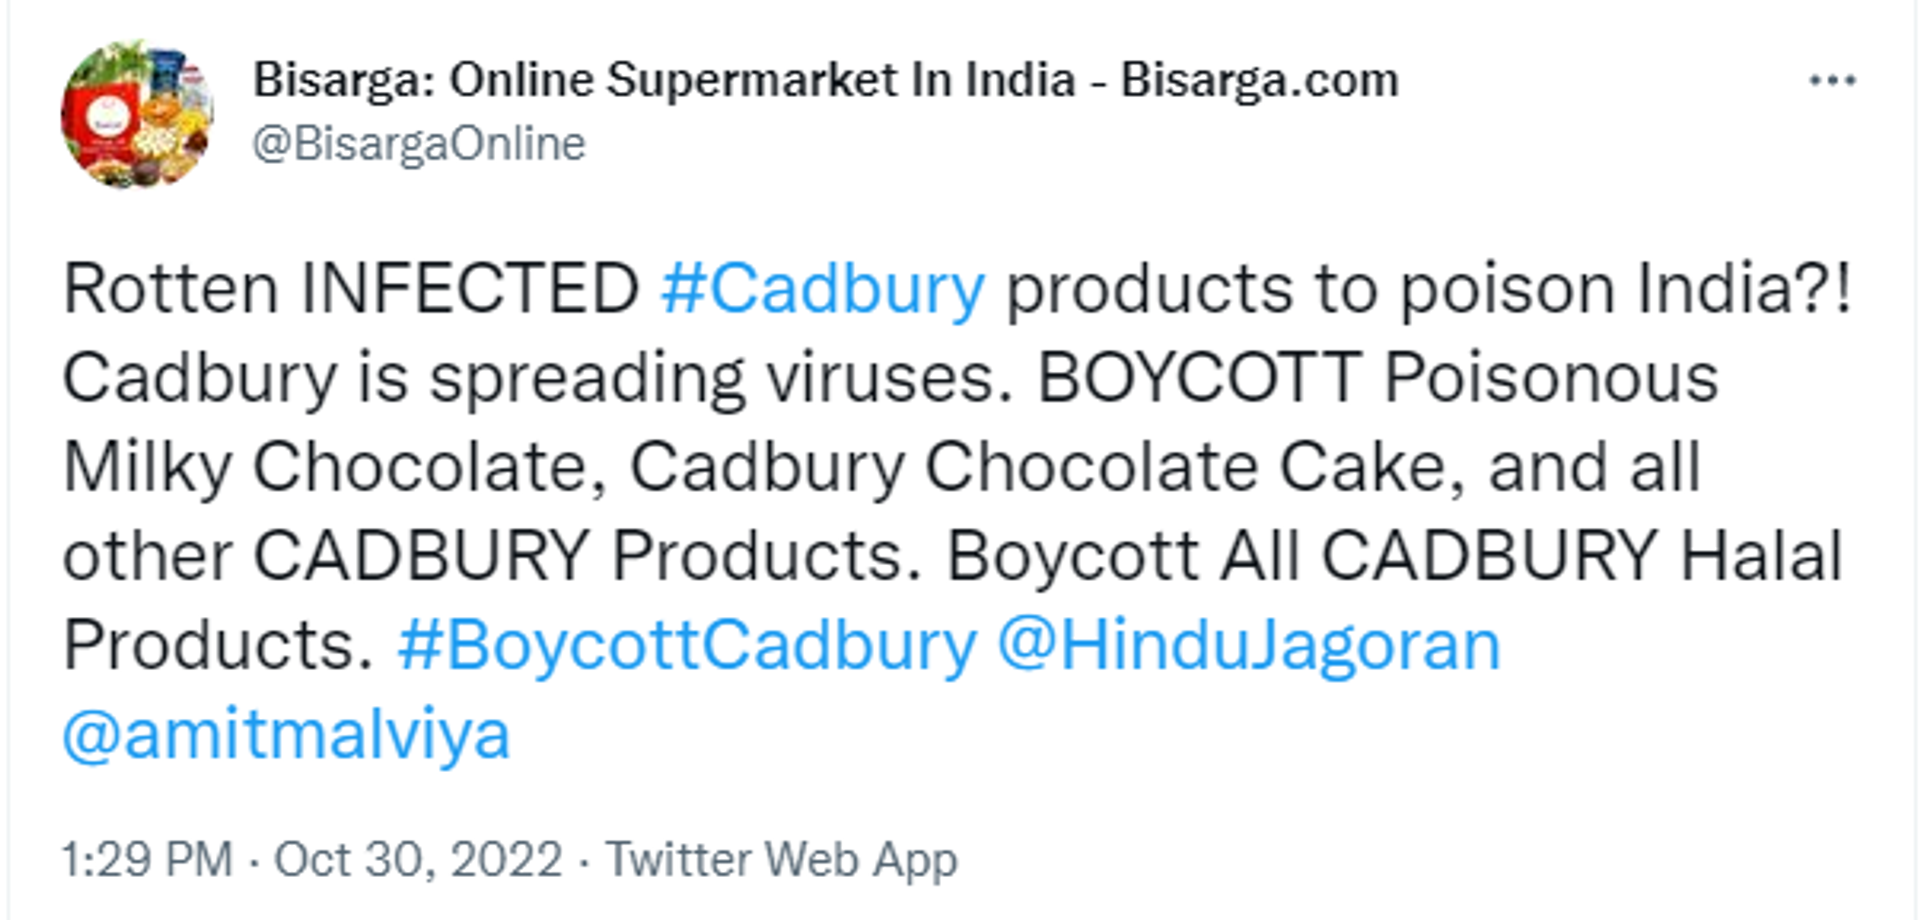 A Twitter User Calls for Boycott of all Cadbury Products - Sputnik International, 1920, 30.10.2022